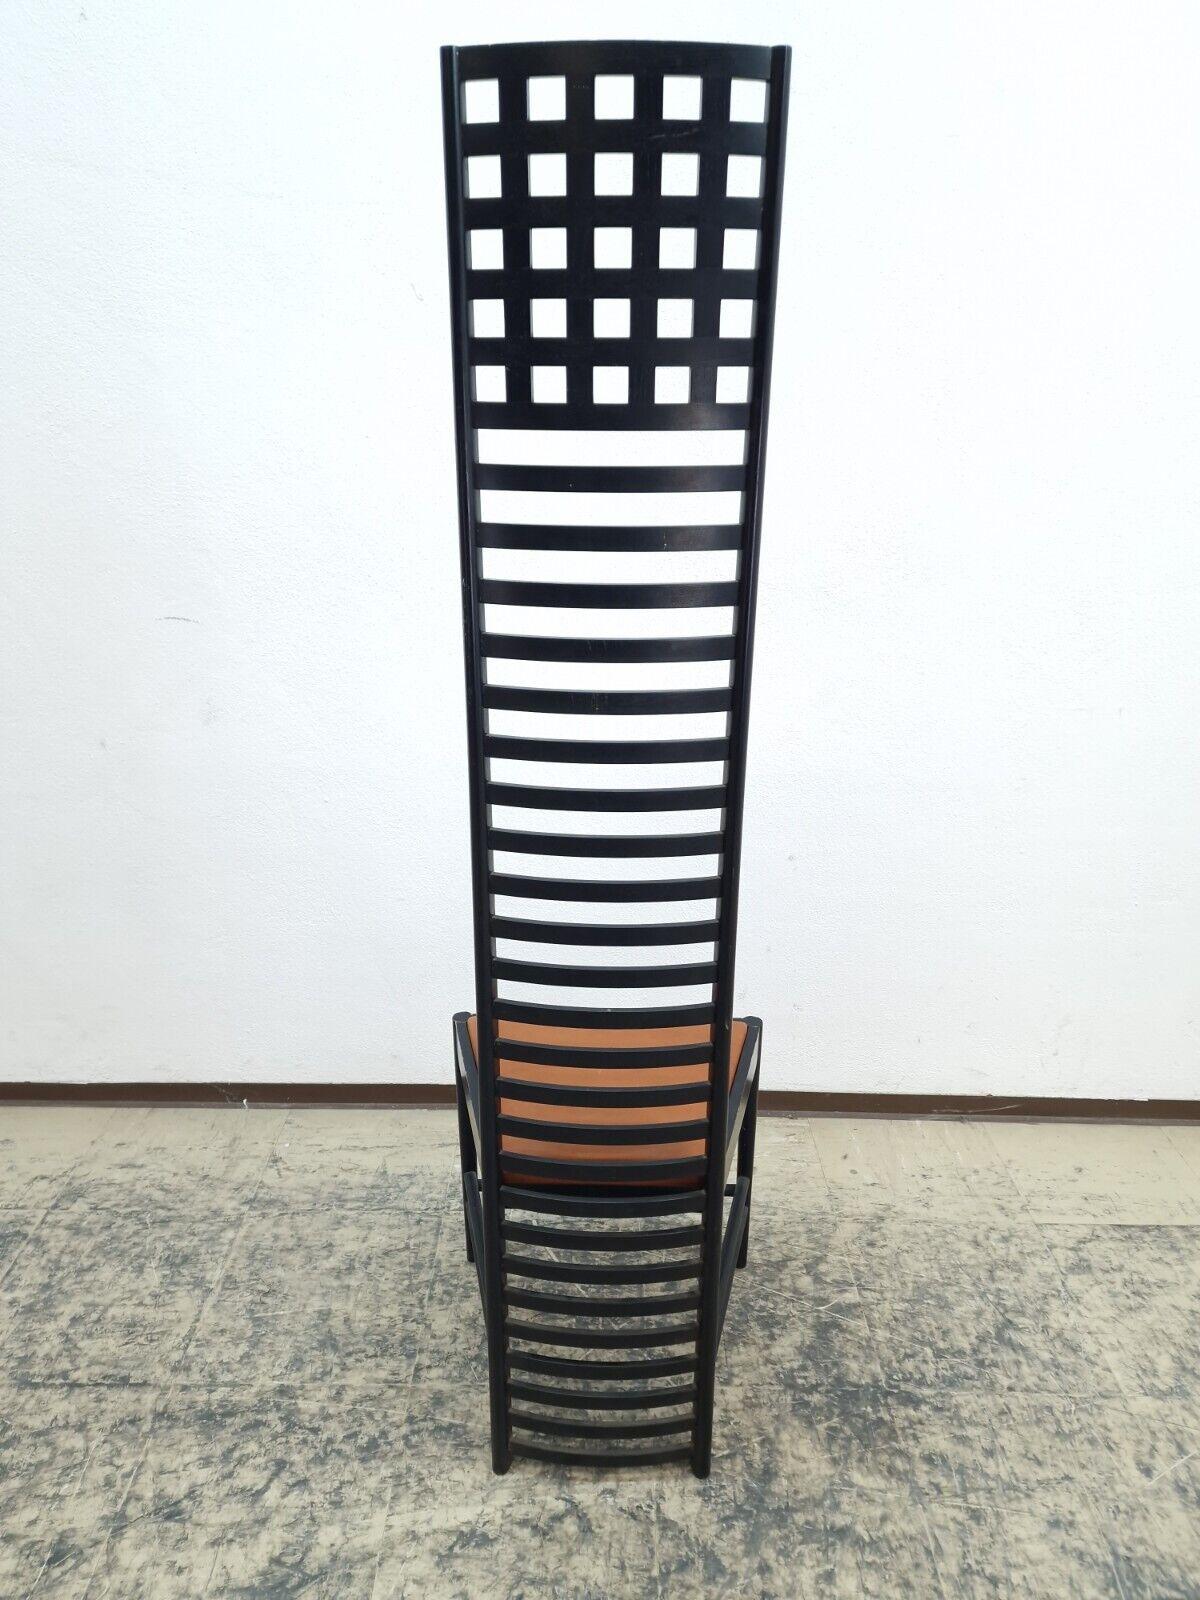 Cassina Rennie Mackintosh Holzstuhl Designerstuhl Hill House chair In Fair Condition For Sale In Garching a. d. Alz, DE